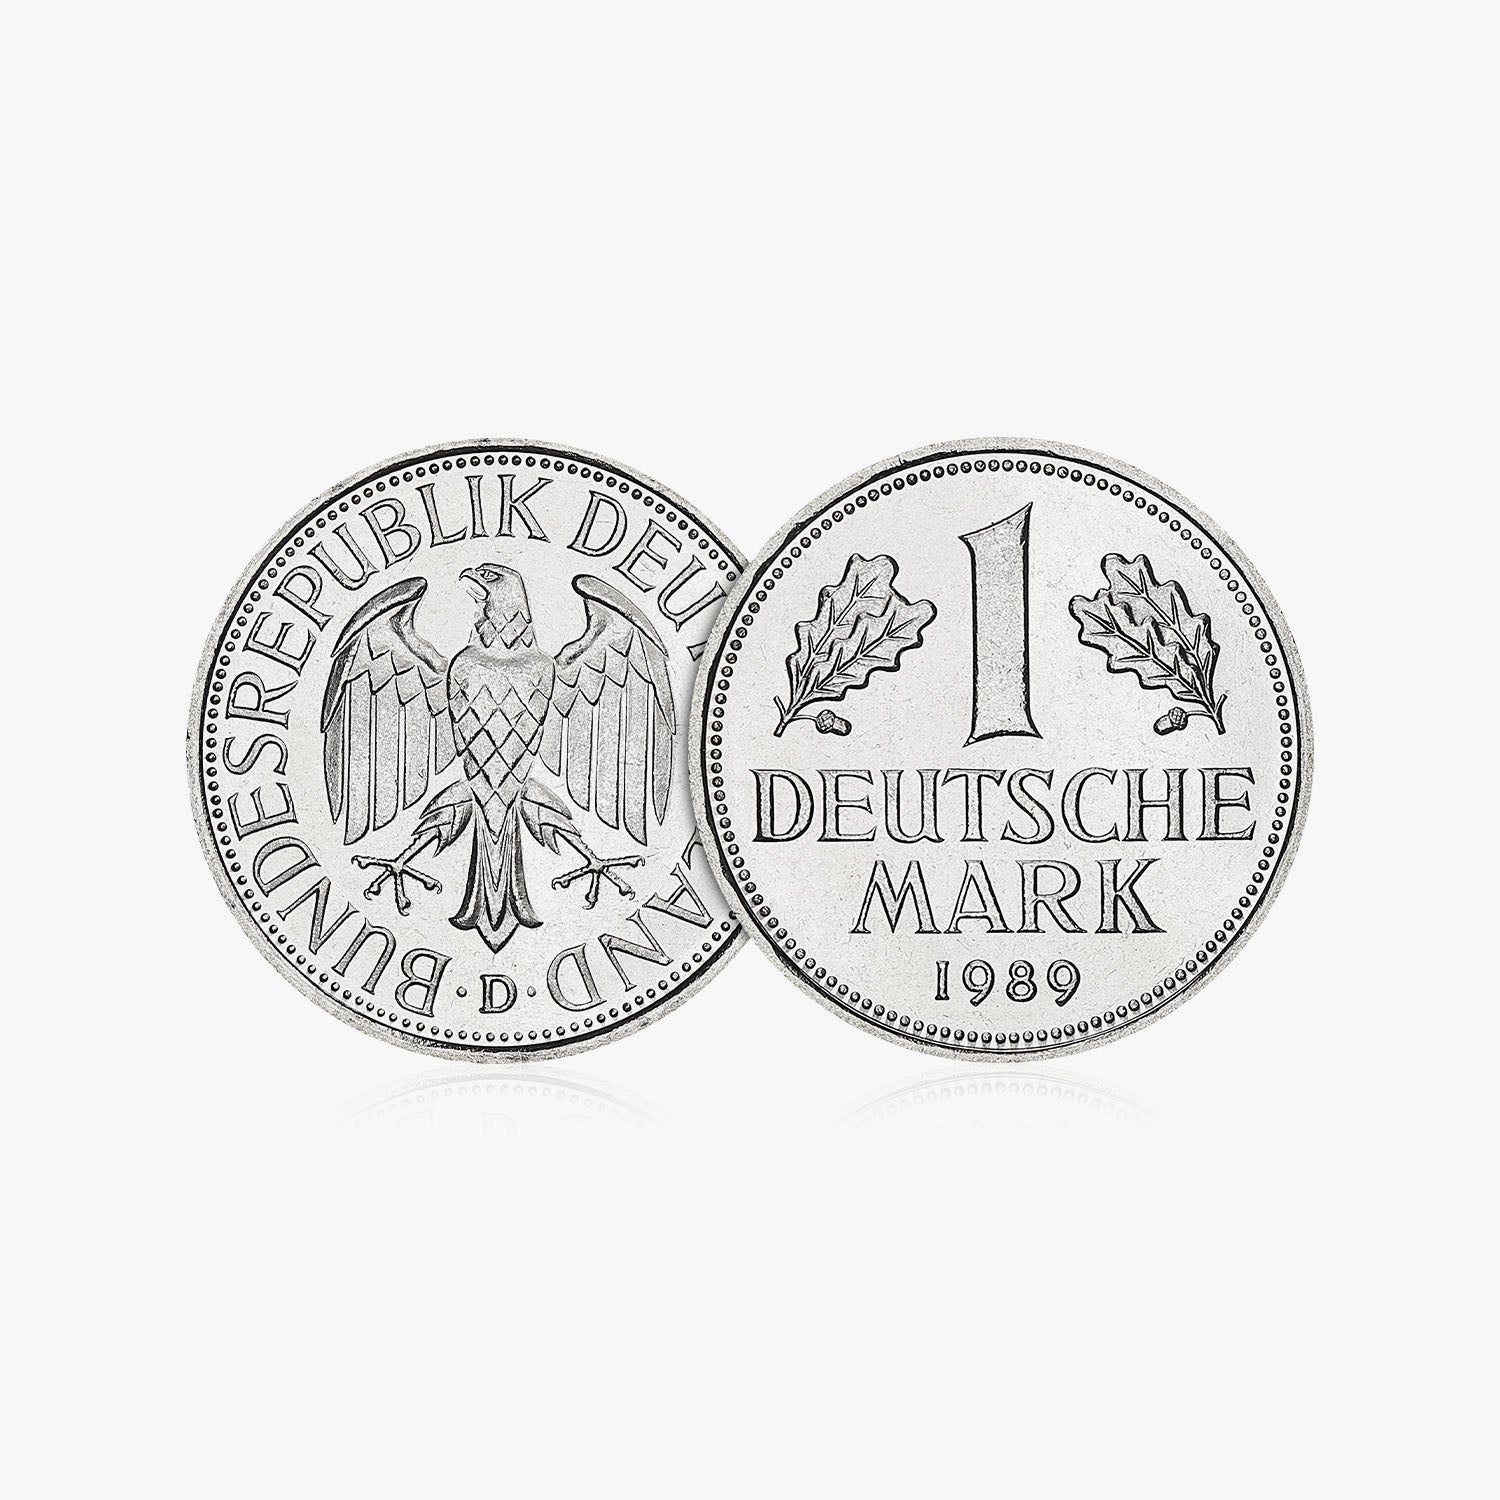 1989 1 Deutsche Mark coin in Berlin Wall section